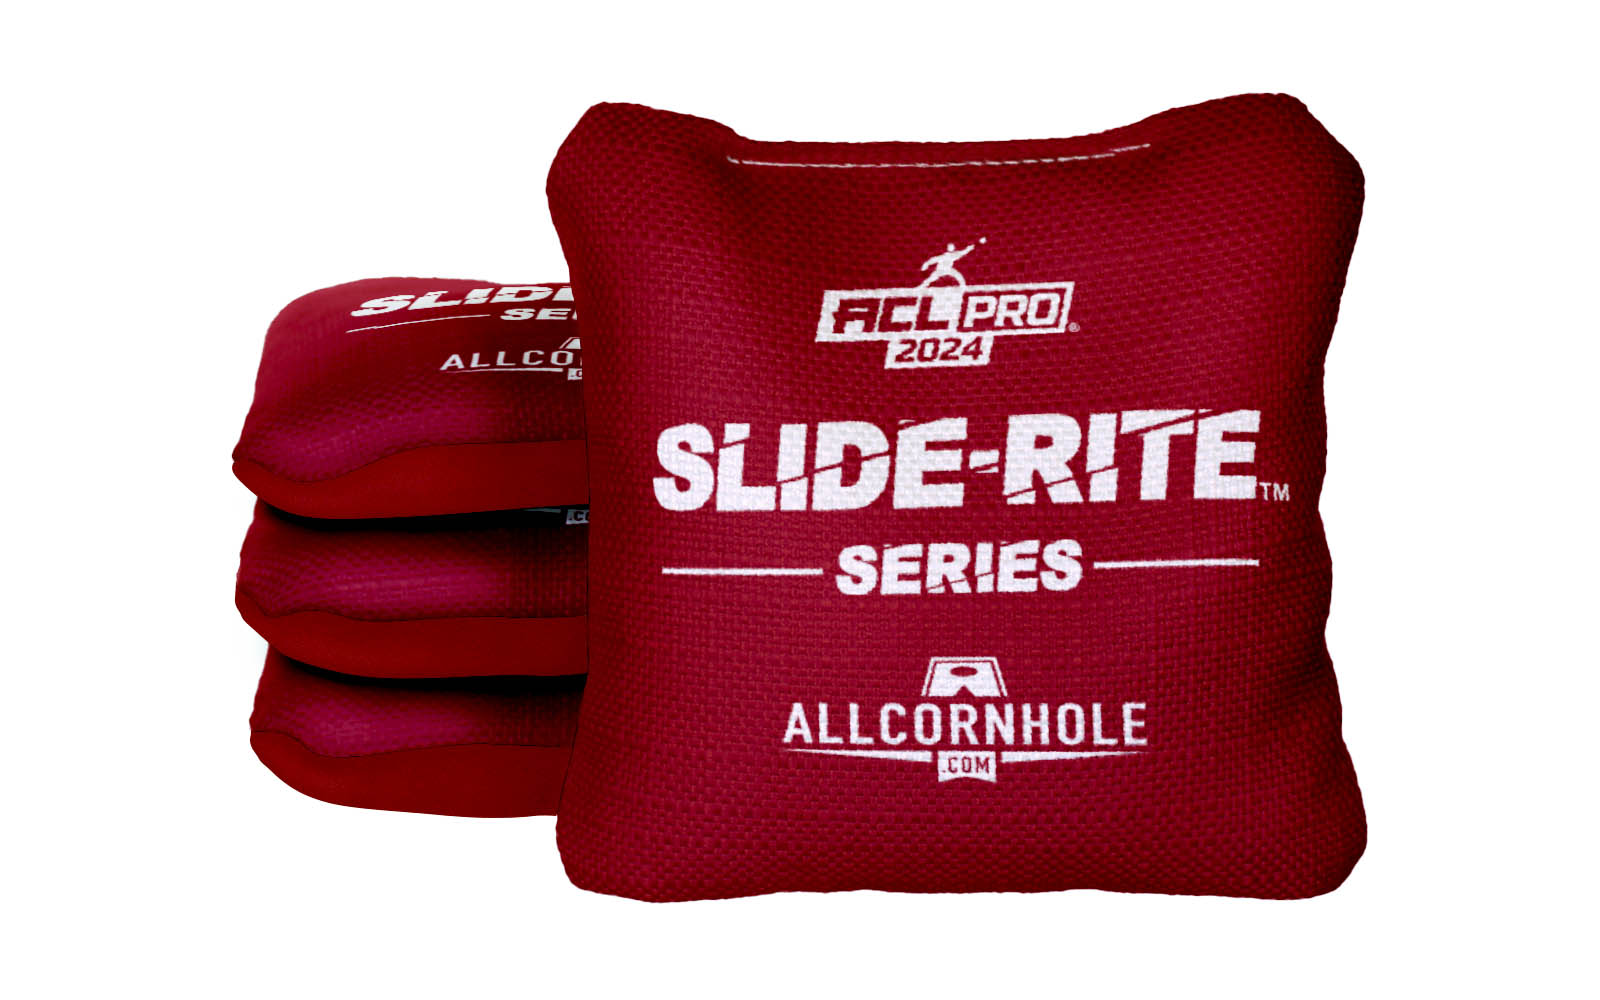 Officially Licensed Collegiate Cornhole Bags - AllCornhole Slide Rite - Set of 4 - University of Alabama